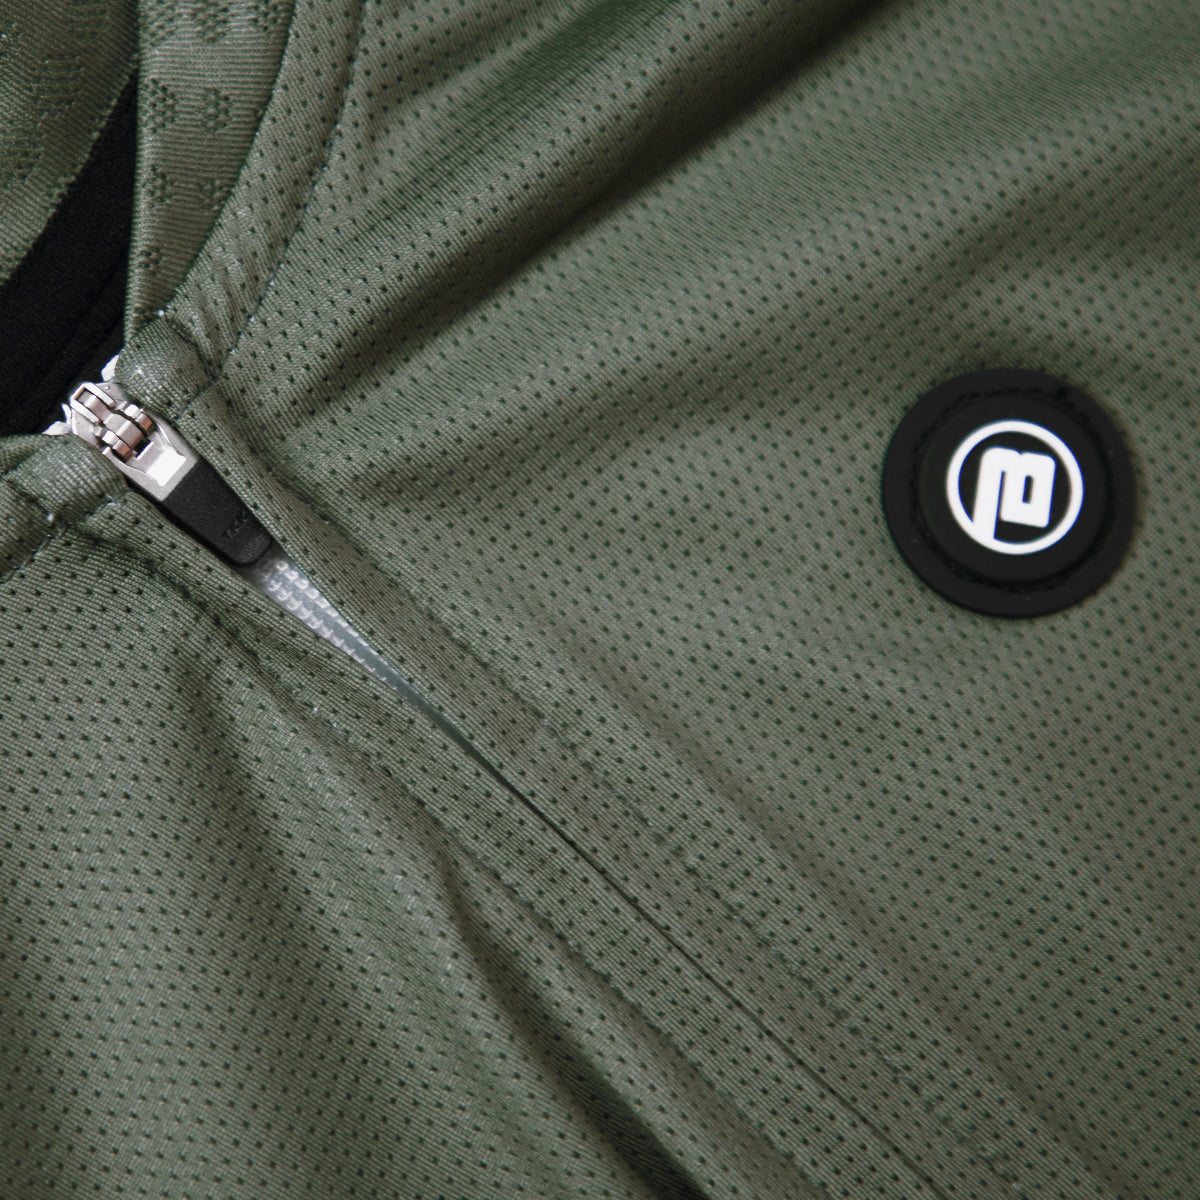 Baisky Premium Short Jersey For Men - TRSJ1180 Purity Green